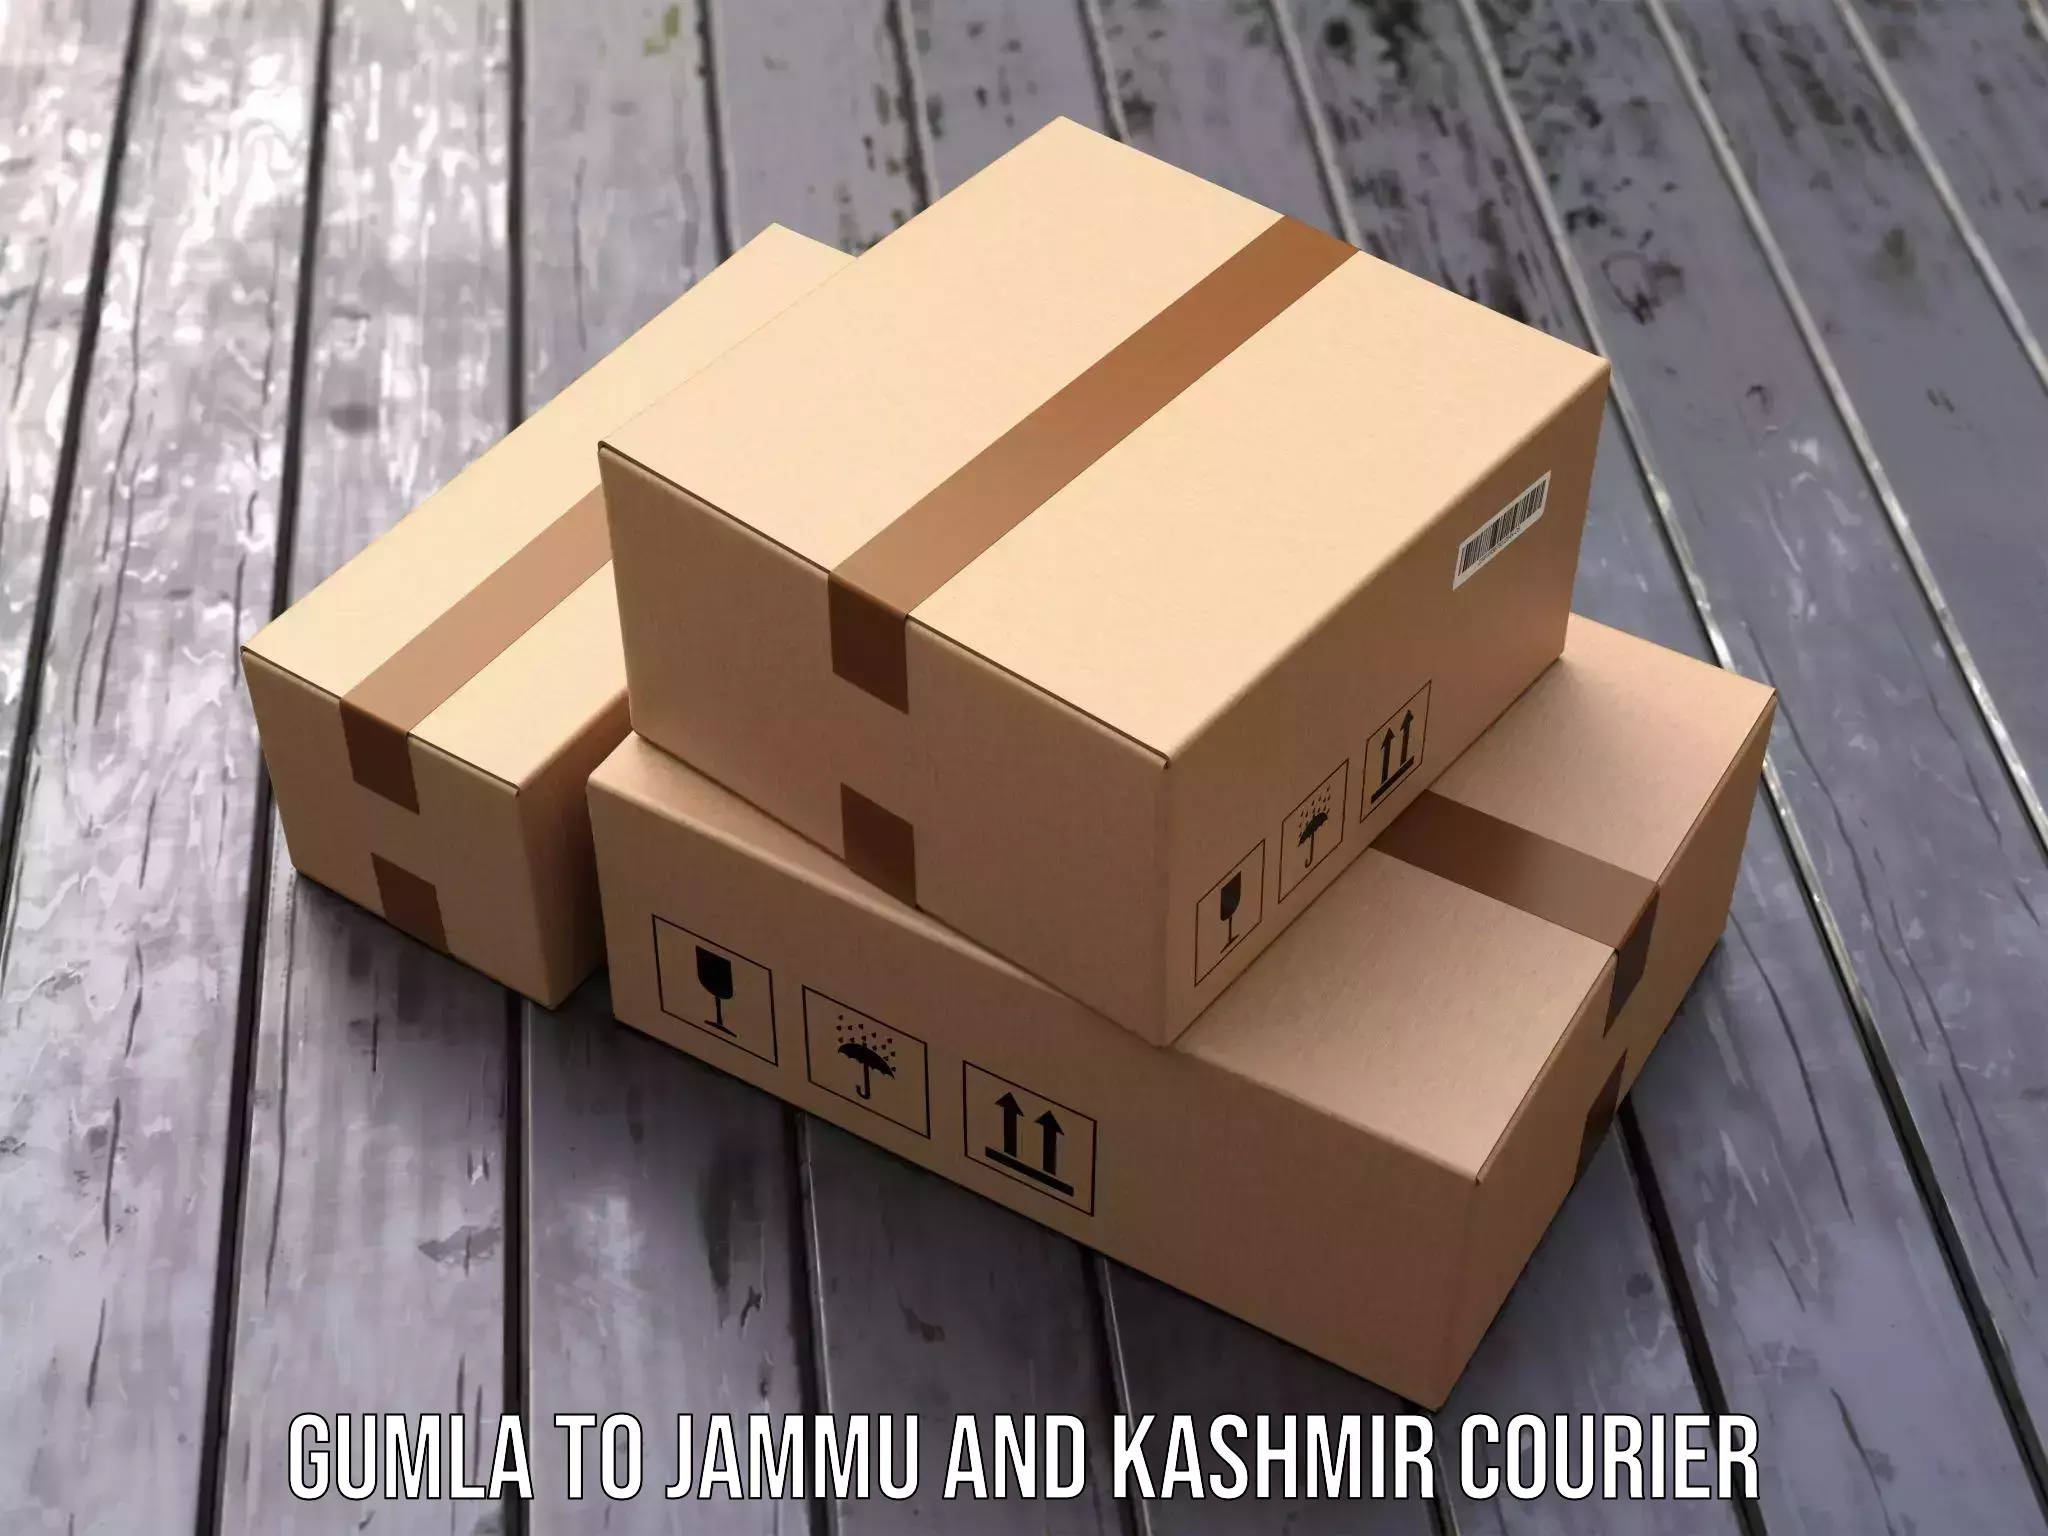 Courier service comparison Gumla to Bandipur